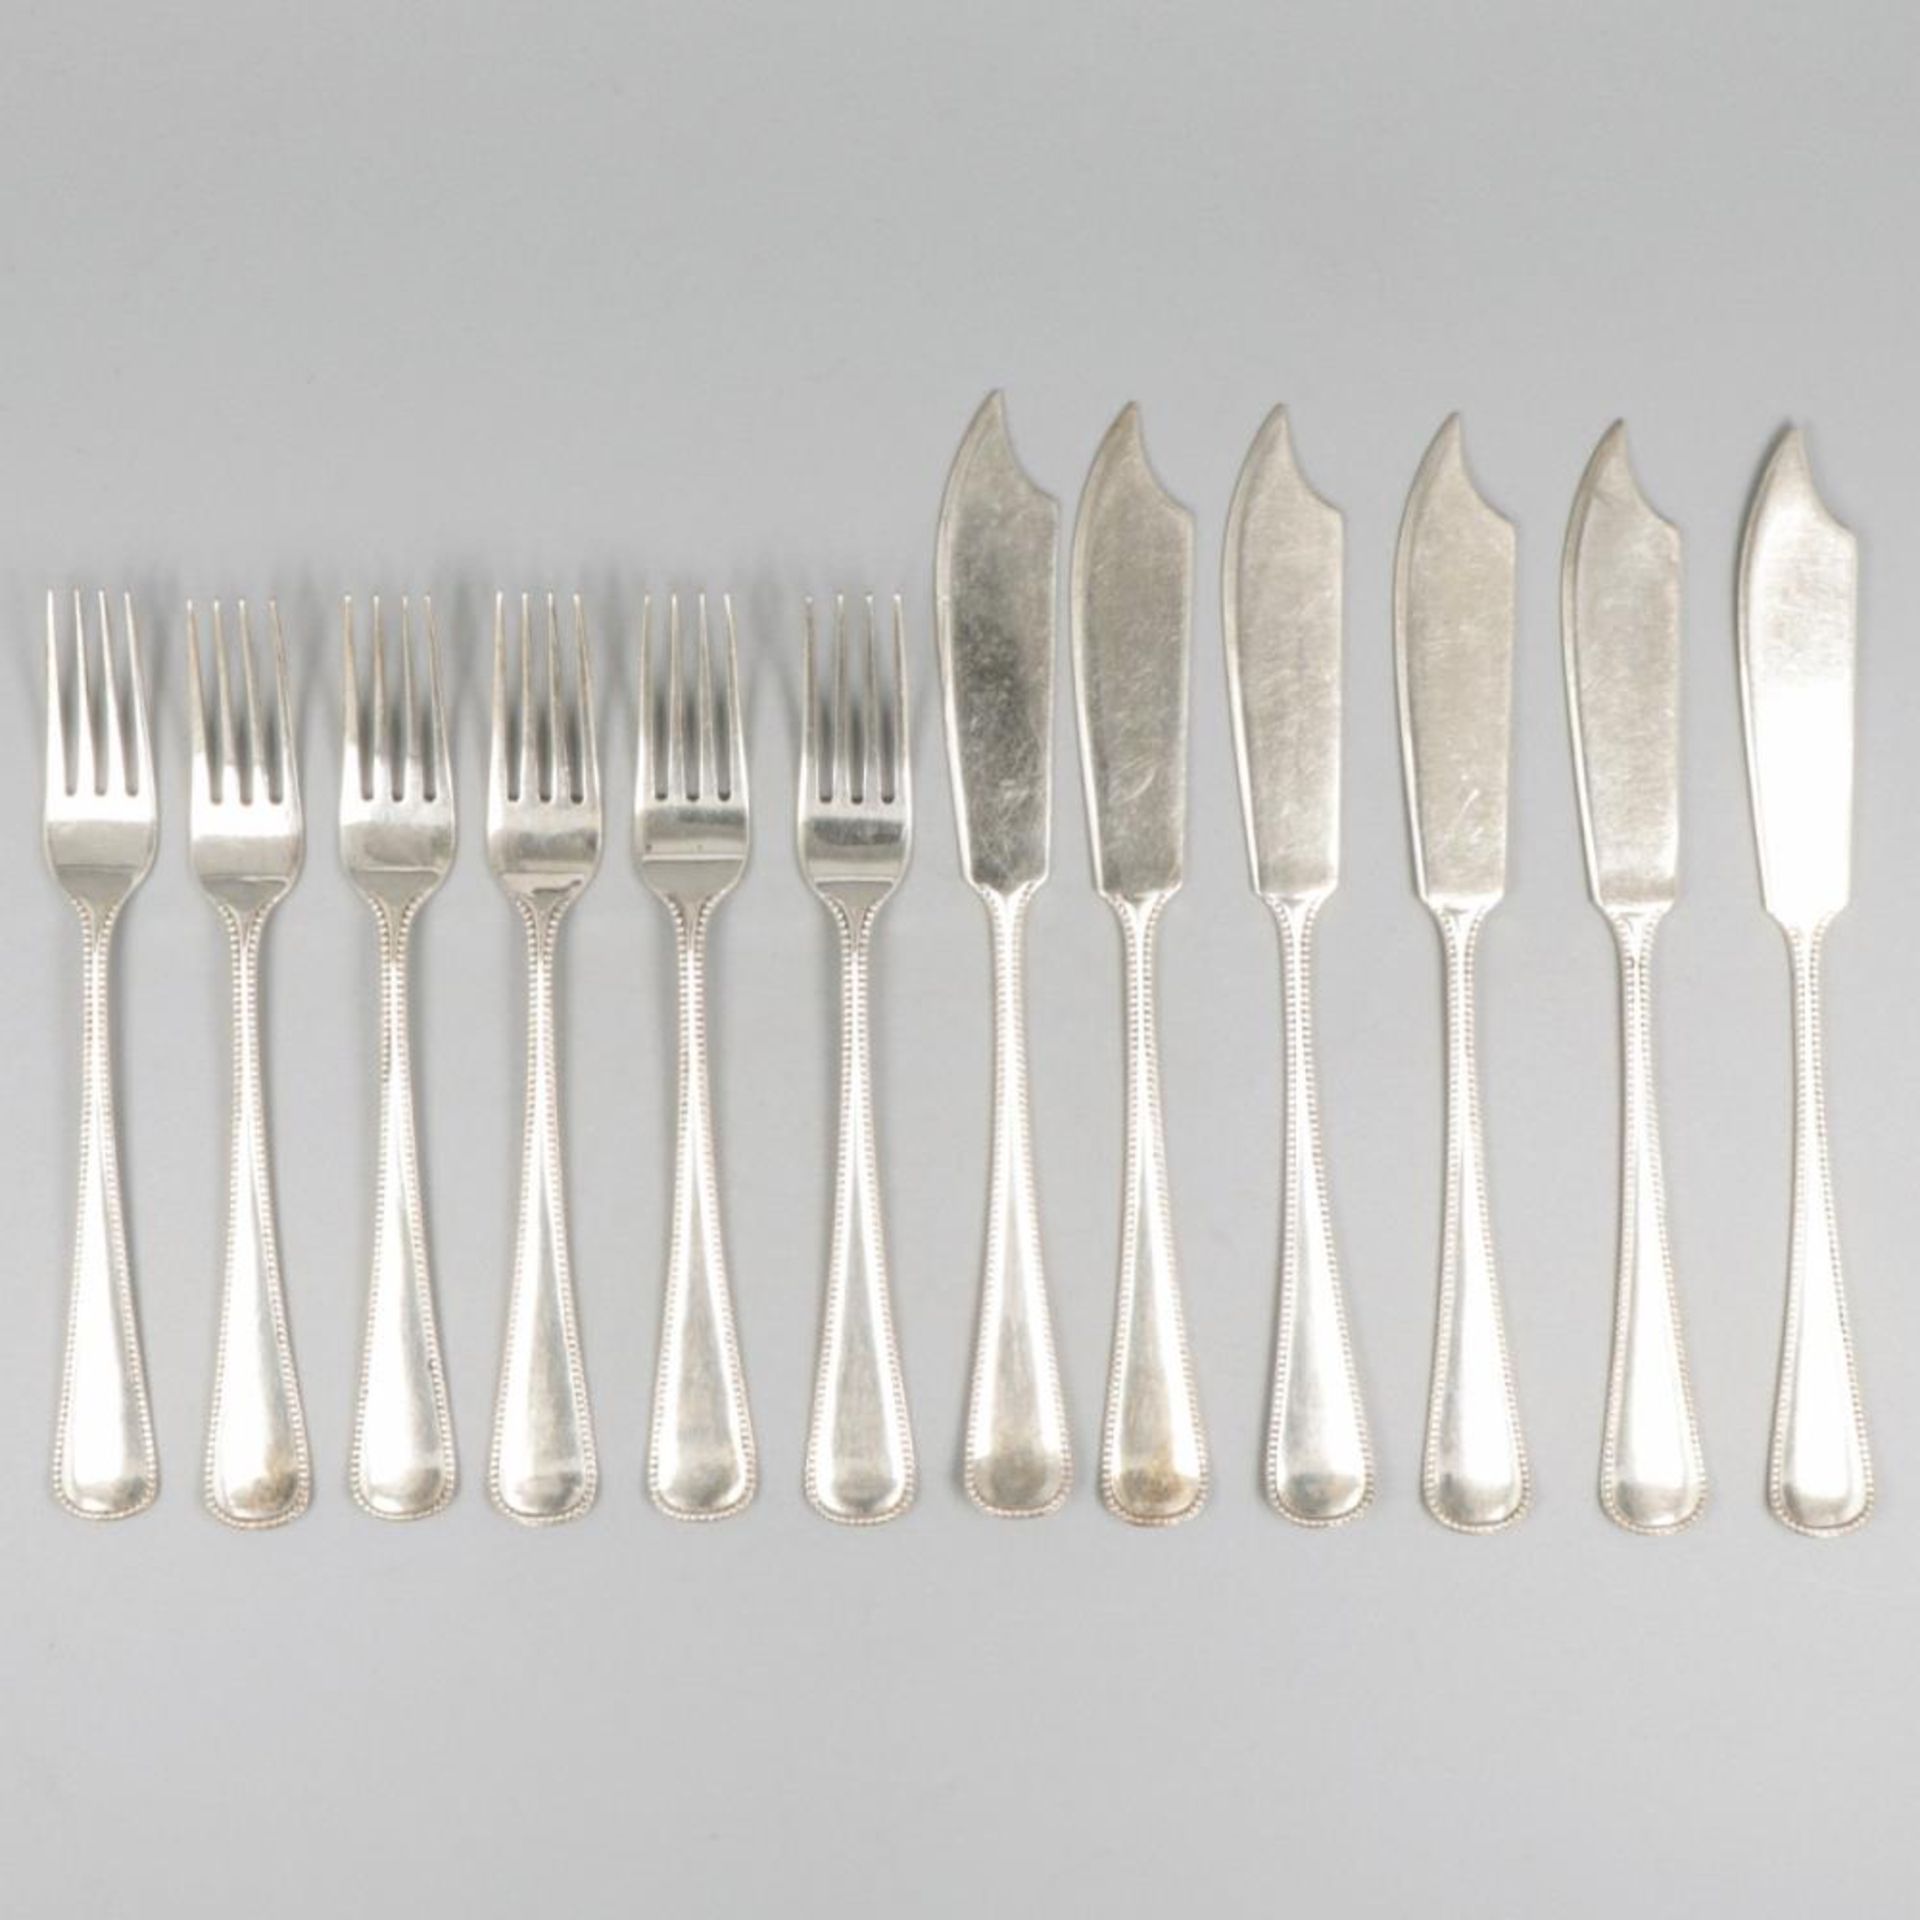 12-piece set of silver fish cutlery.